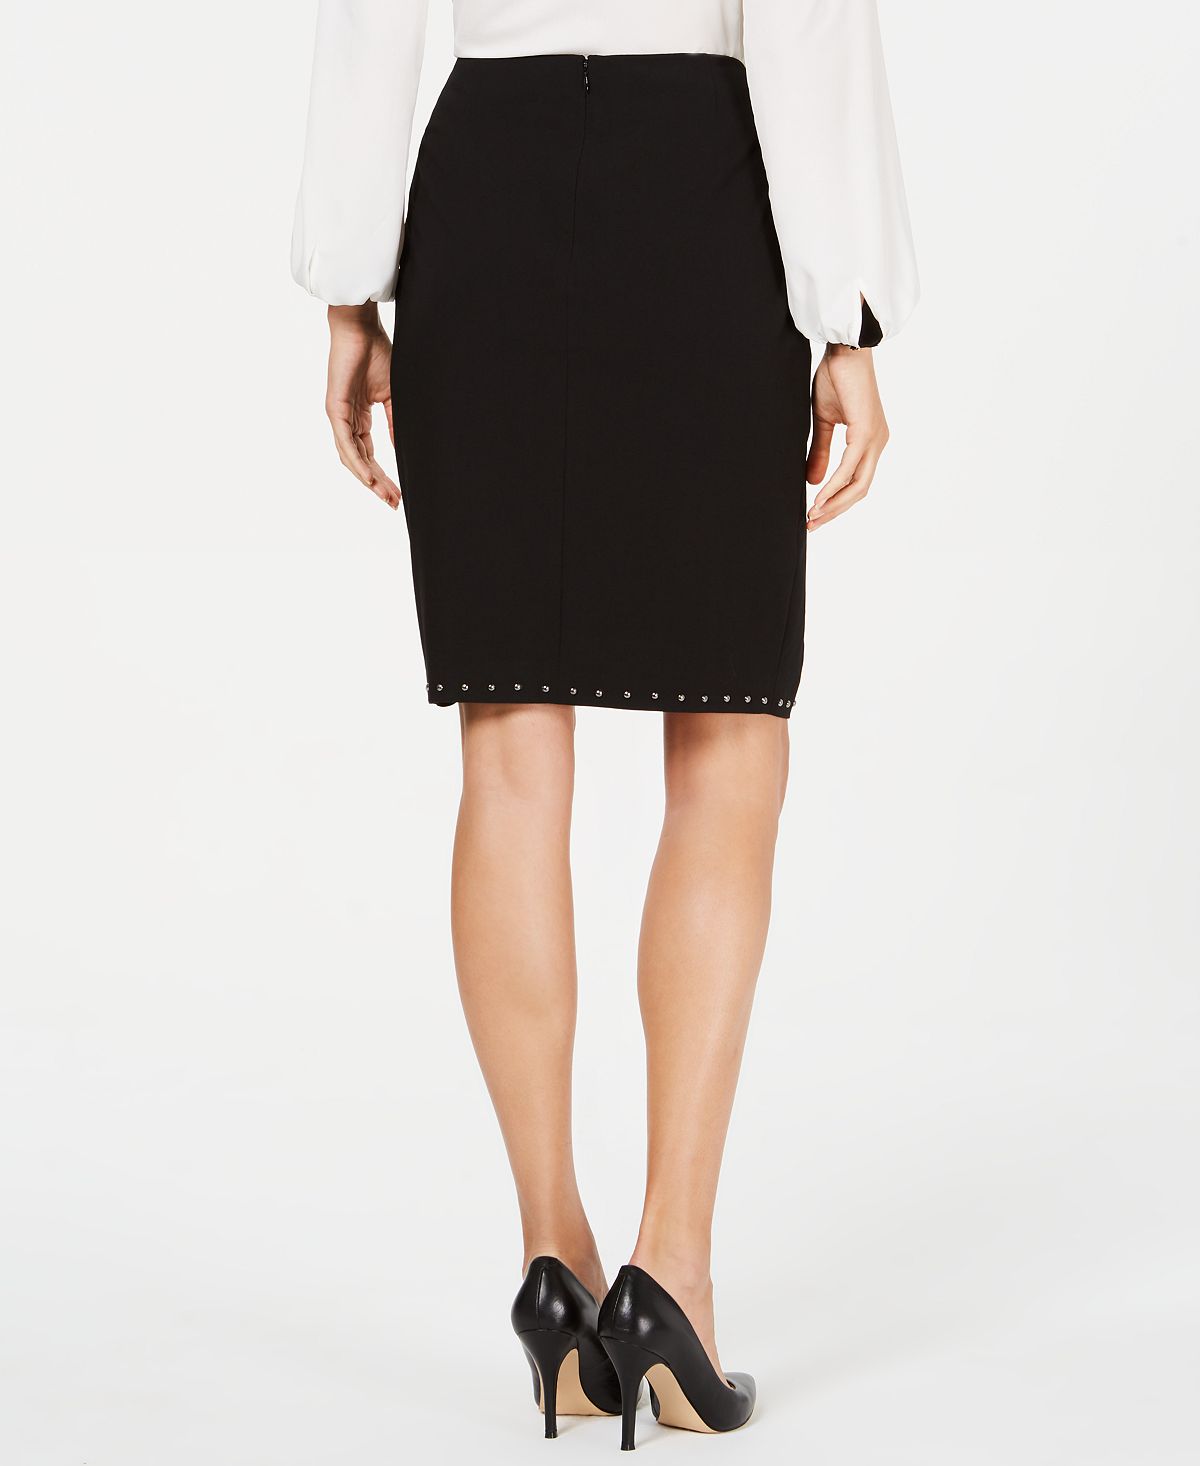 Calvin Klein Women's Studded Asymmetric Pencil Skirt Black Size 10